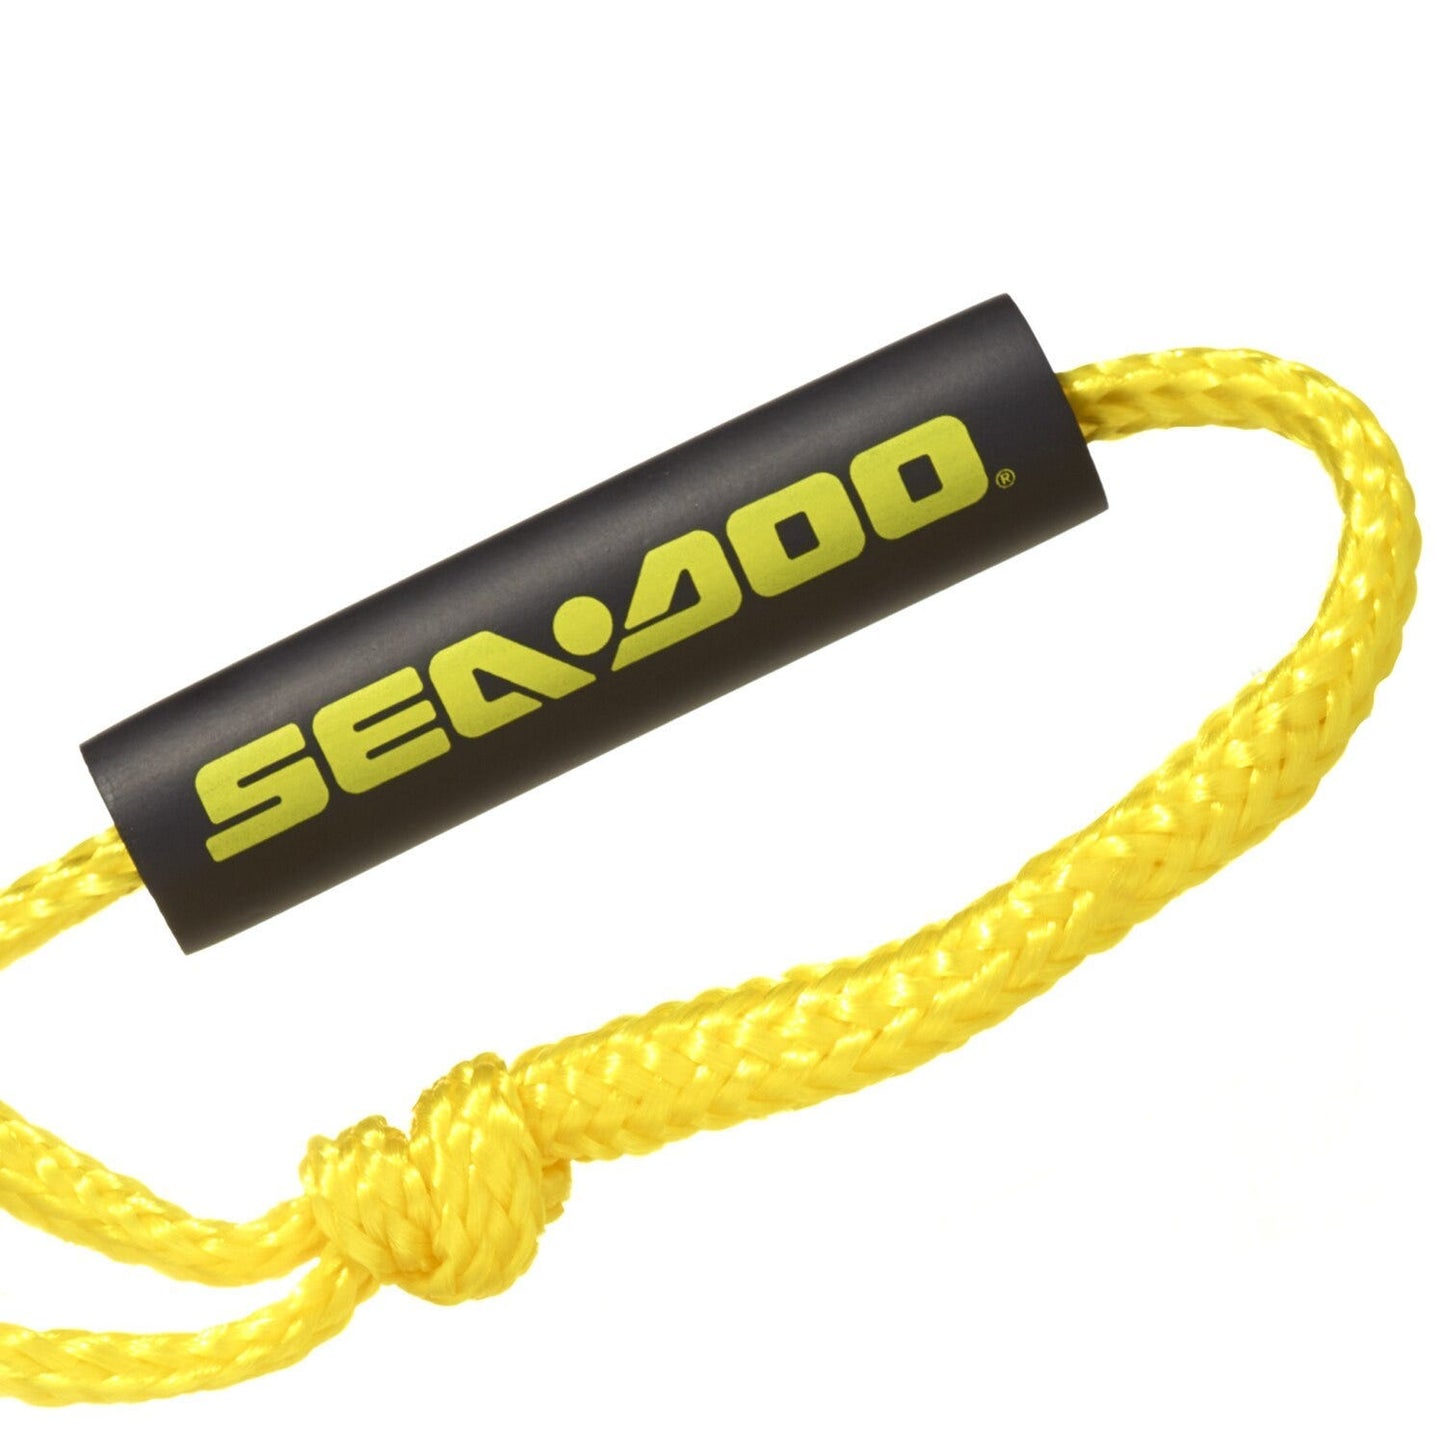 Sea-Doo 4 Person Tube Rope (Test 4100 LBS)